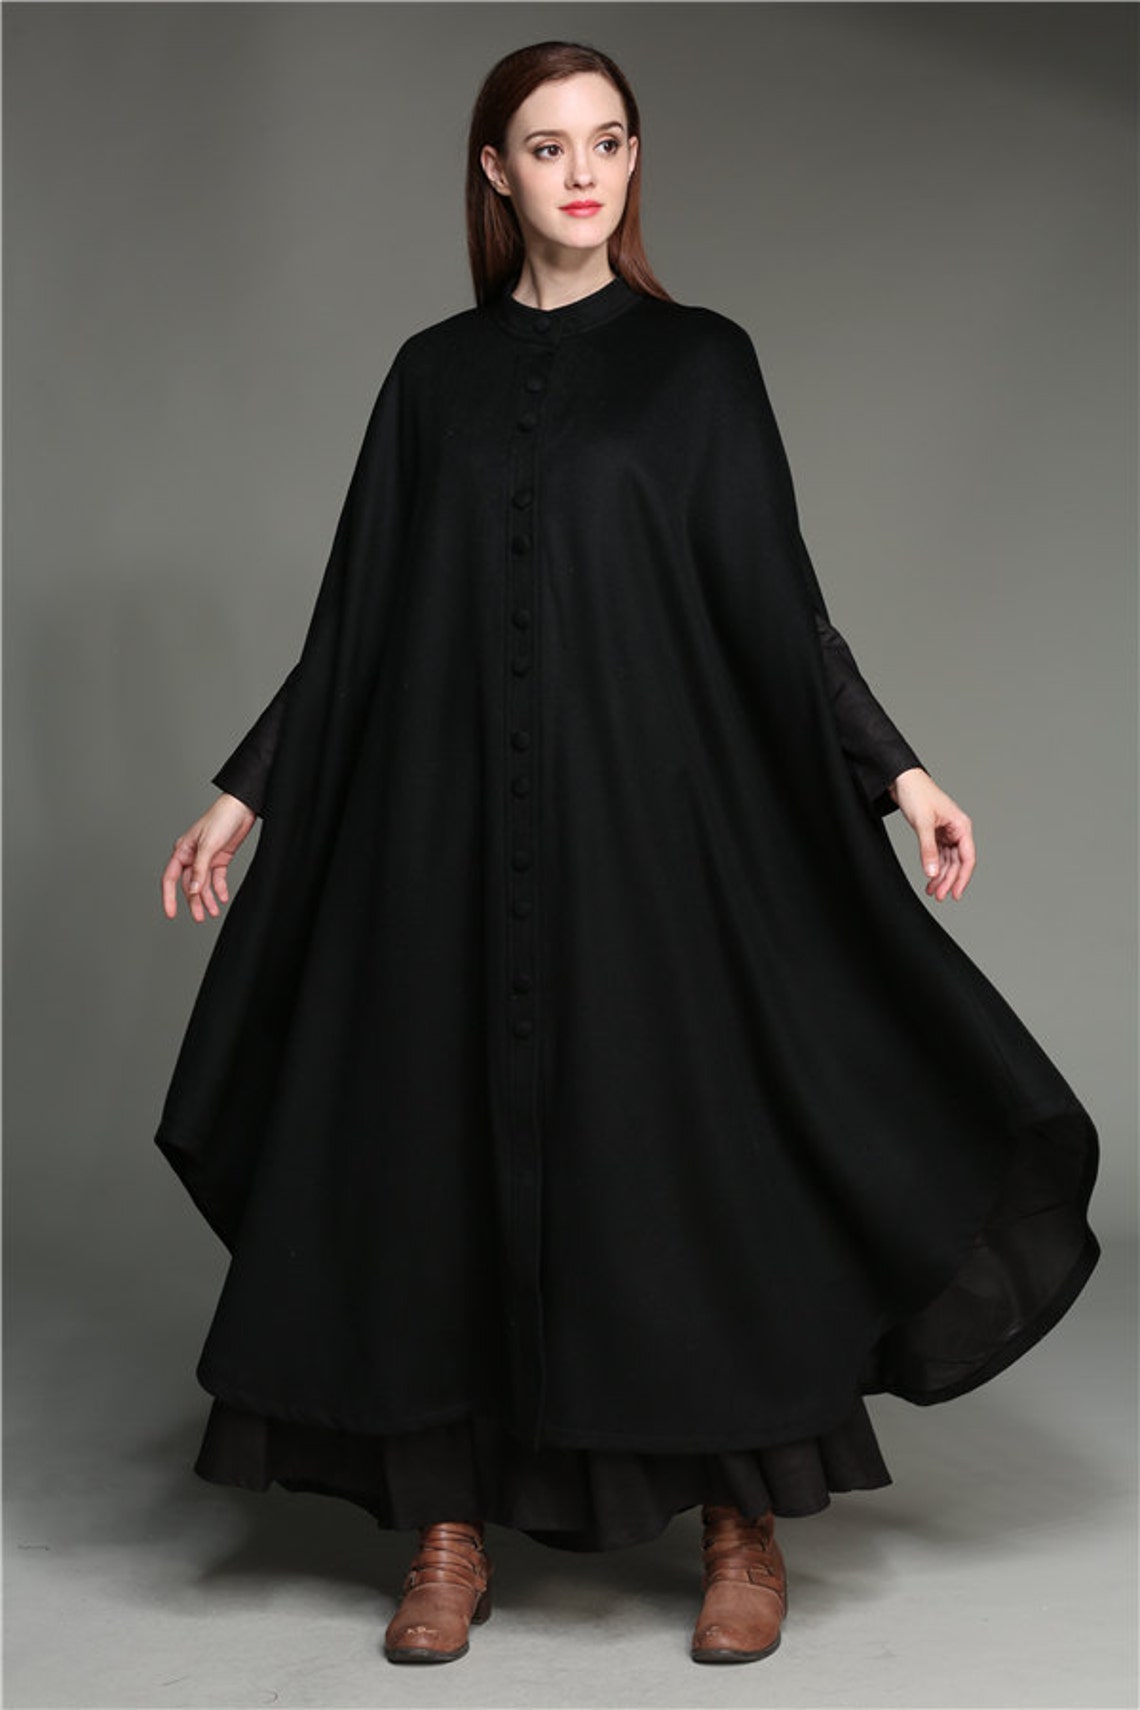 Black Wool Coat 100% Wool Cashmere Maxi Wool Poncho Jacket | Etsy